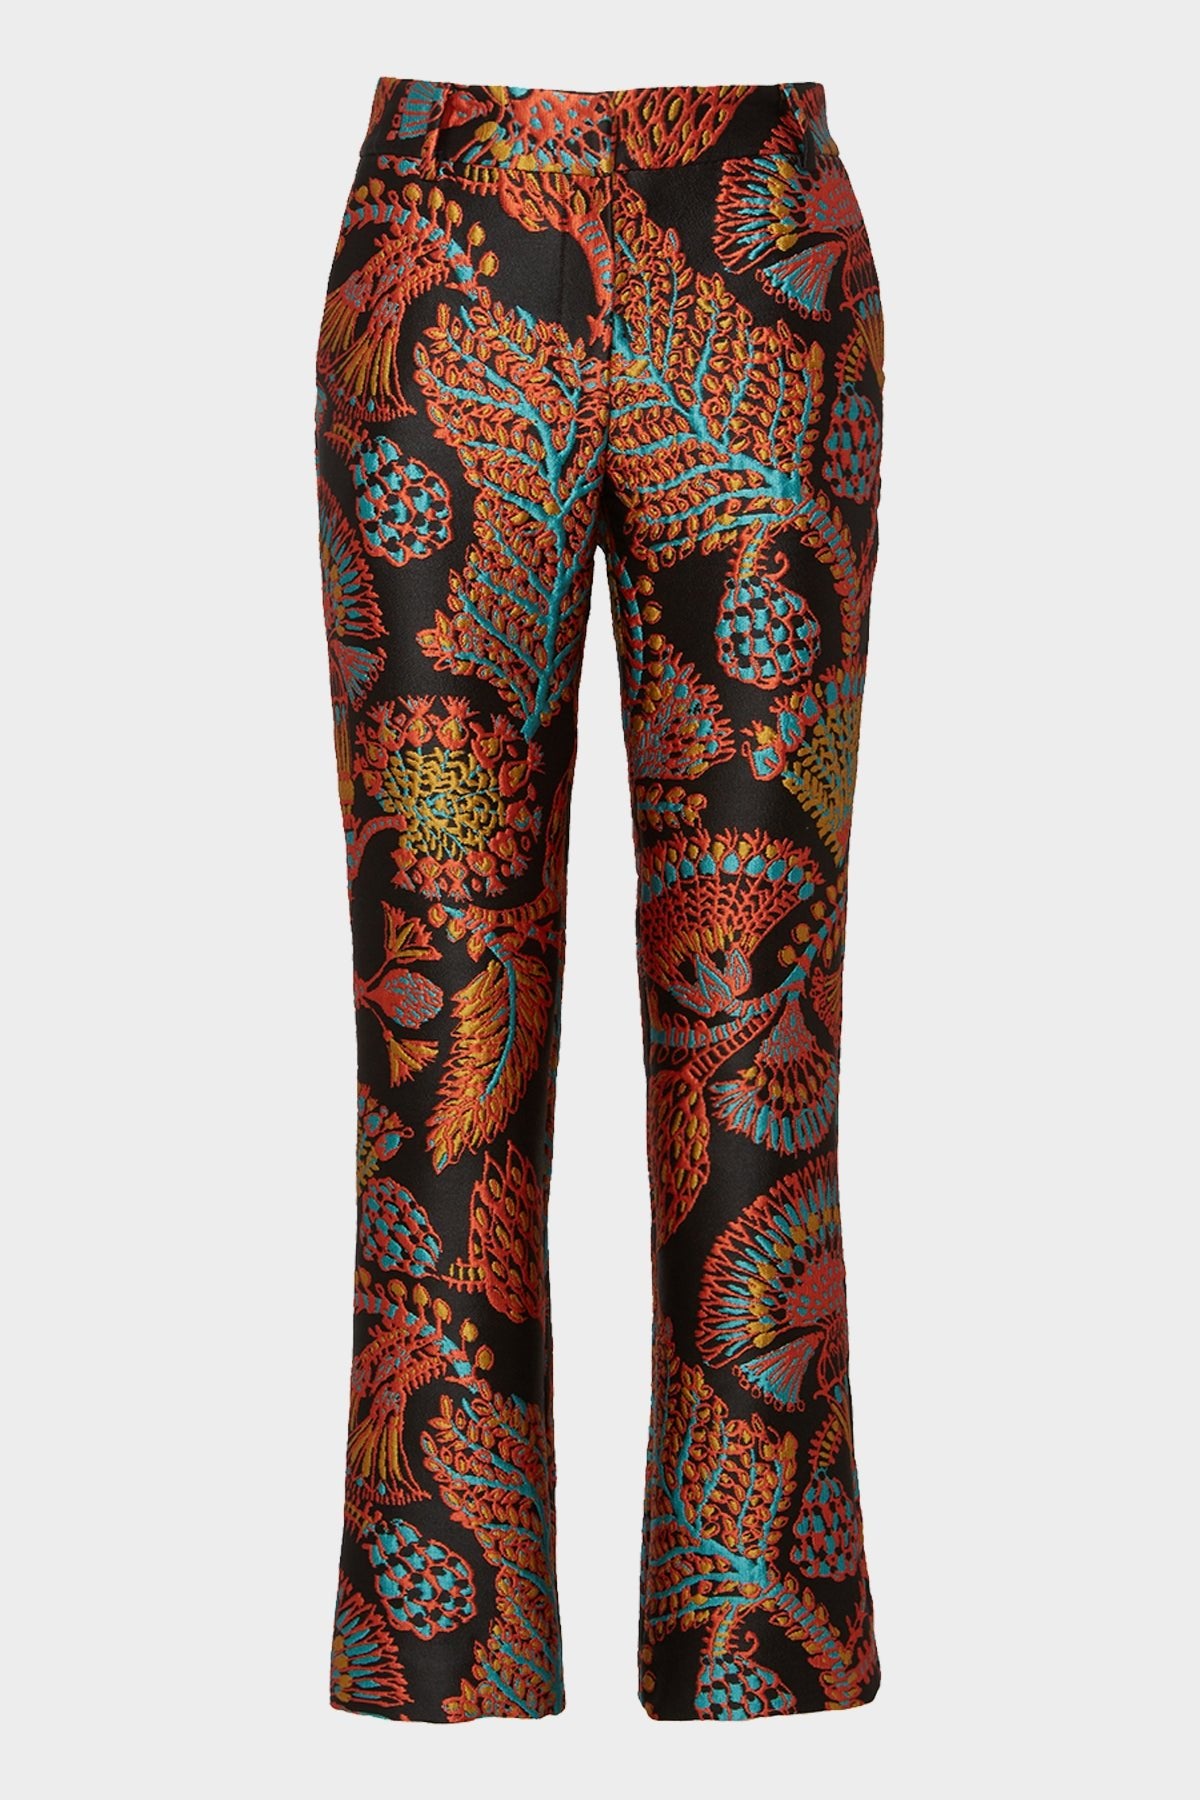 24/7 Pants in Jacquard Sicomore Black - shop-olivia.com